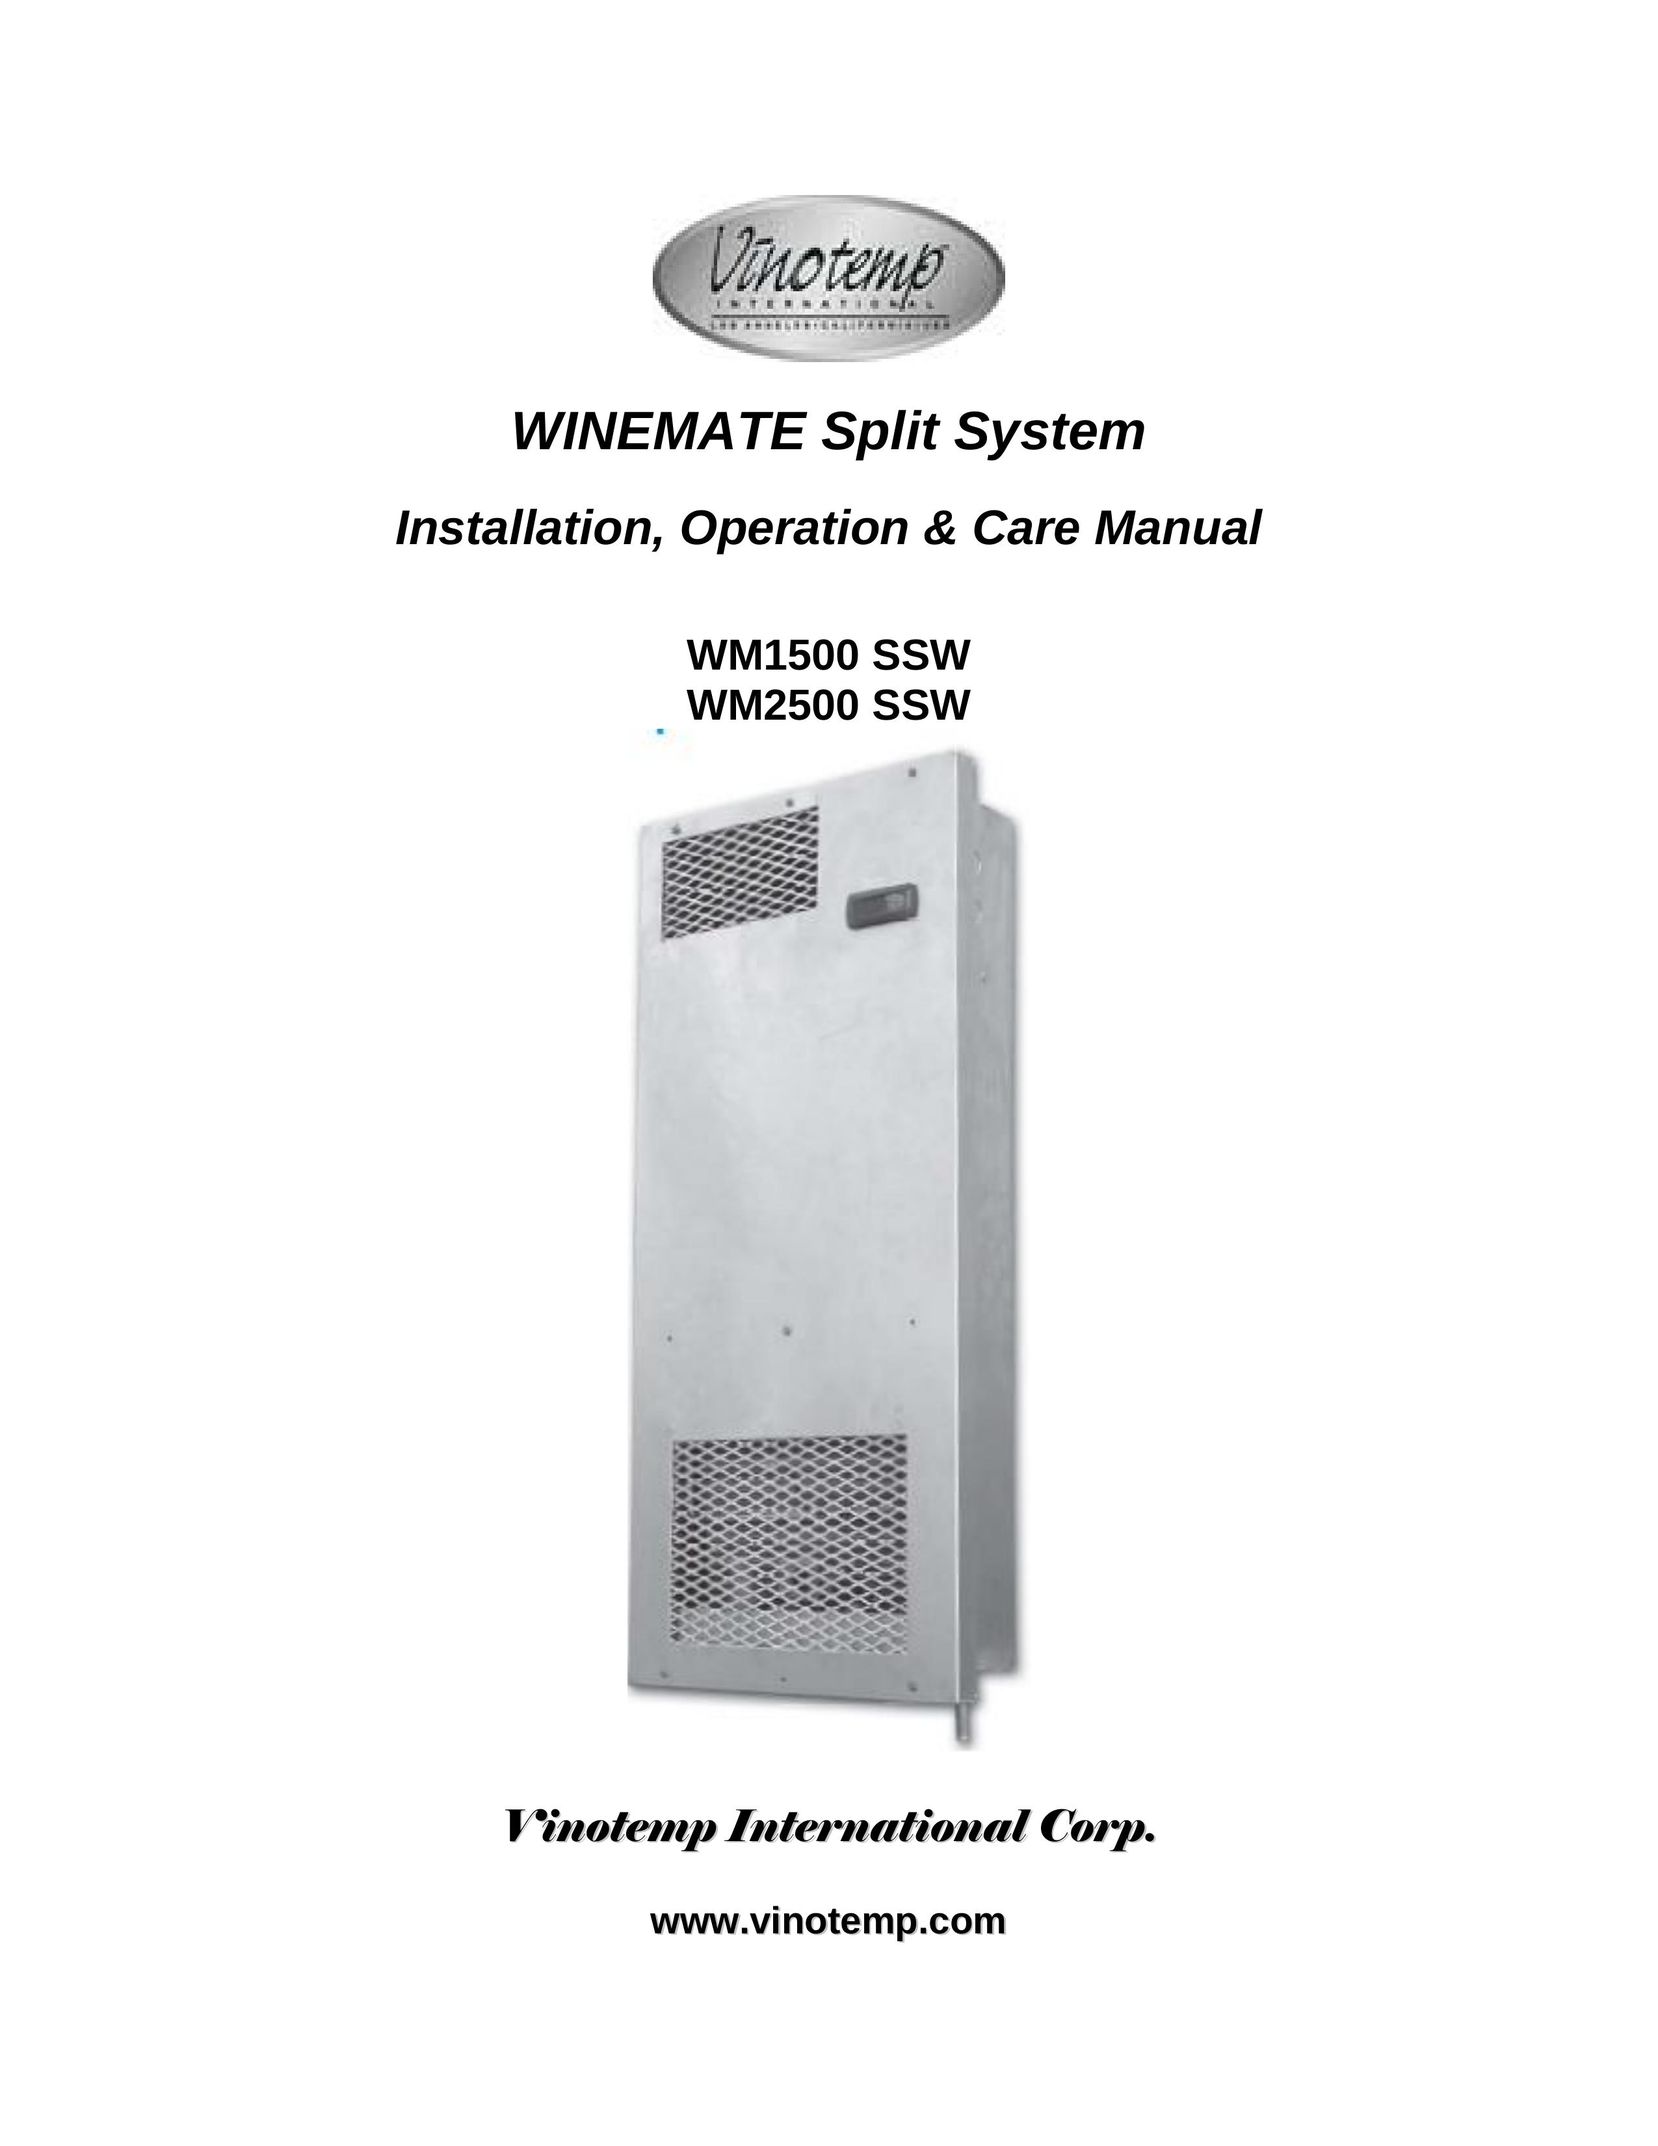 Vinotemp WM2500 SSW Air Conditioner User Manual